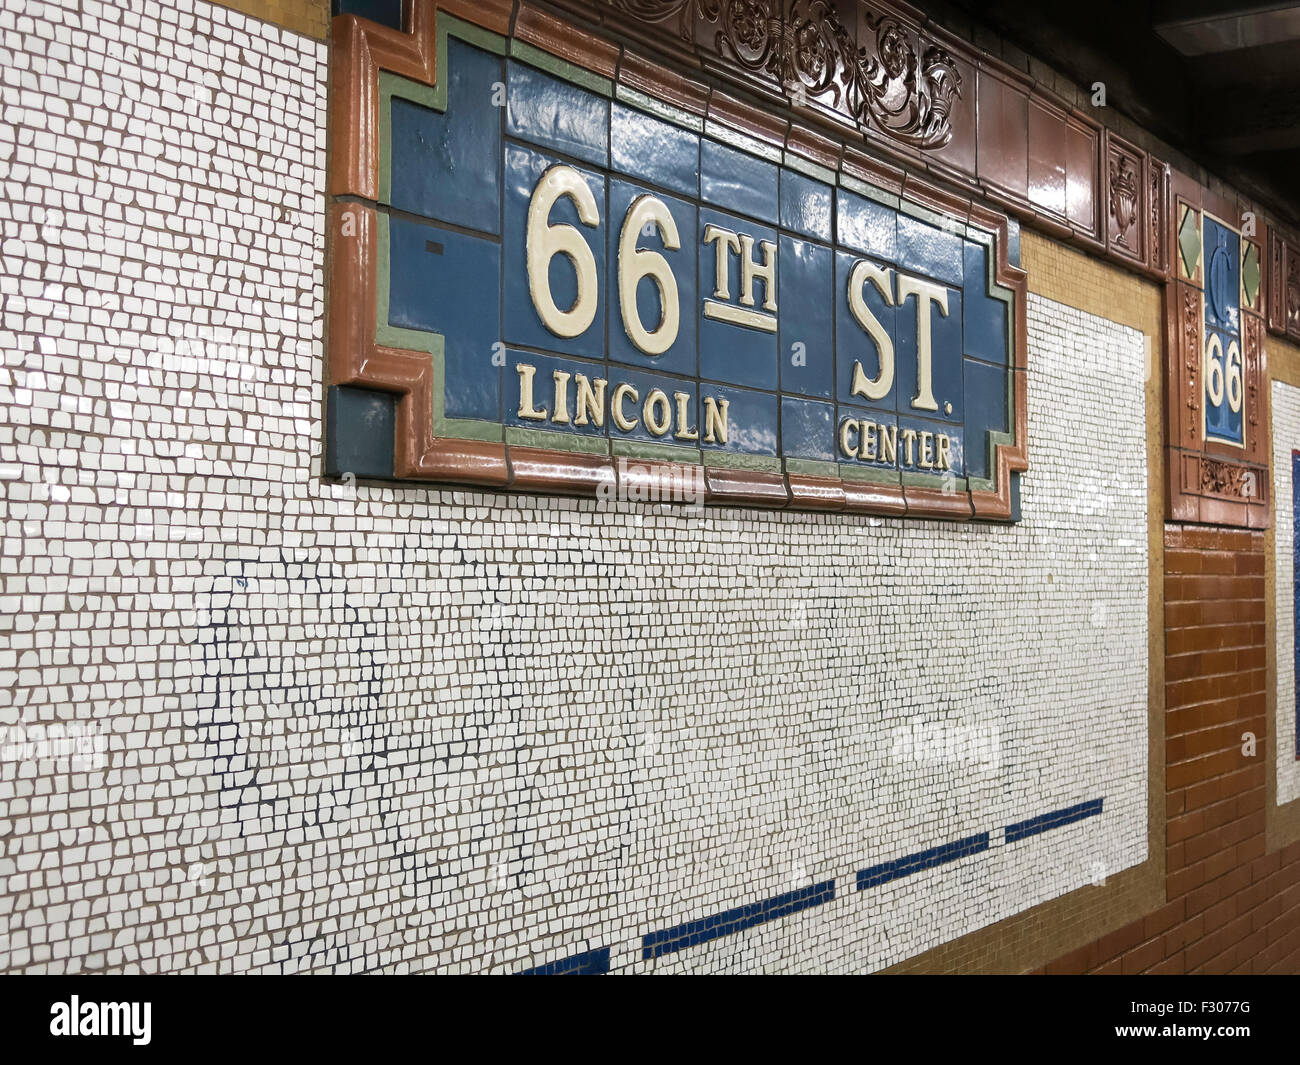 66th St. - Lincoln Center Subway Station Platform, NYC, USA Stock Photo